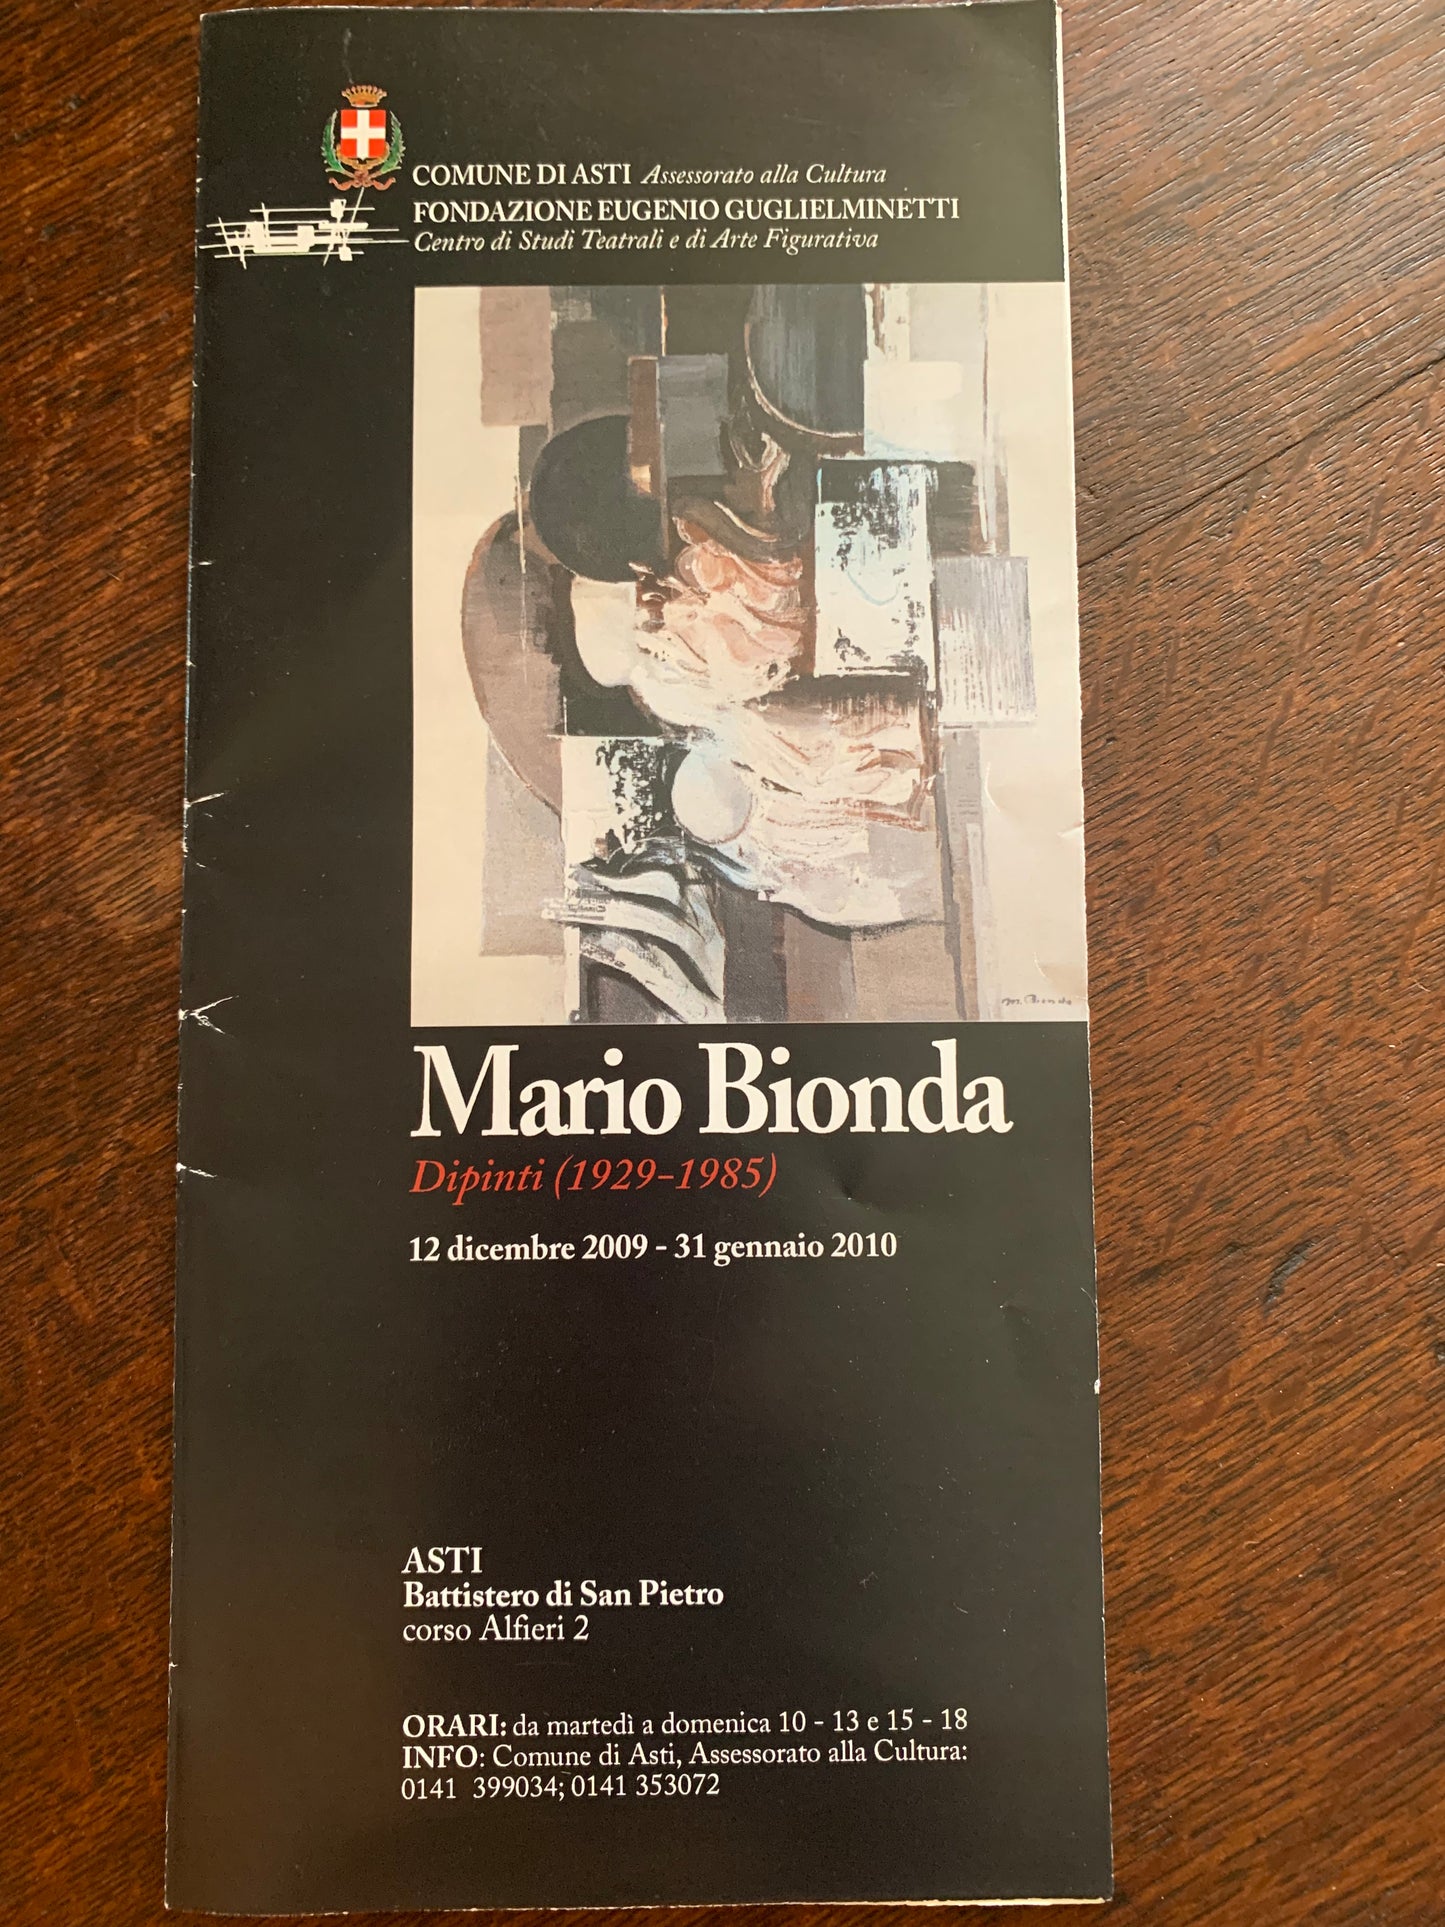 Double portrait. Metaphysical realism. Mario Bionda. (1929-1985)